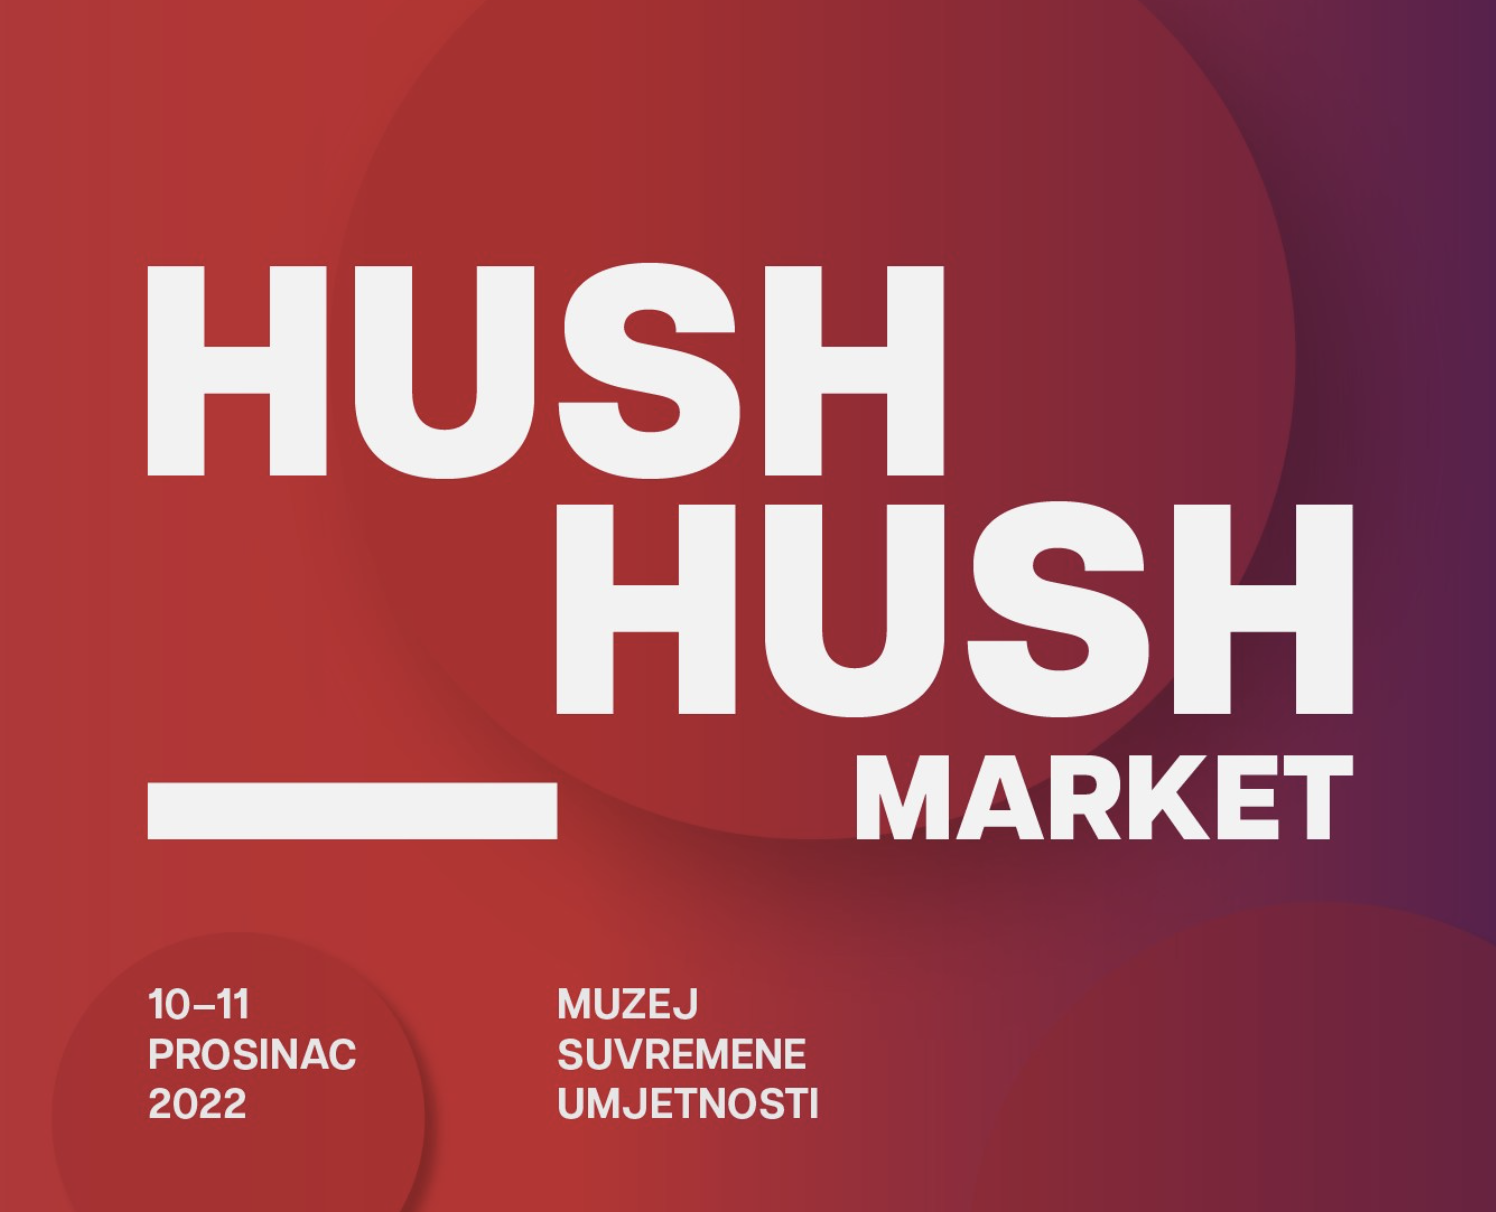 husg hush market 